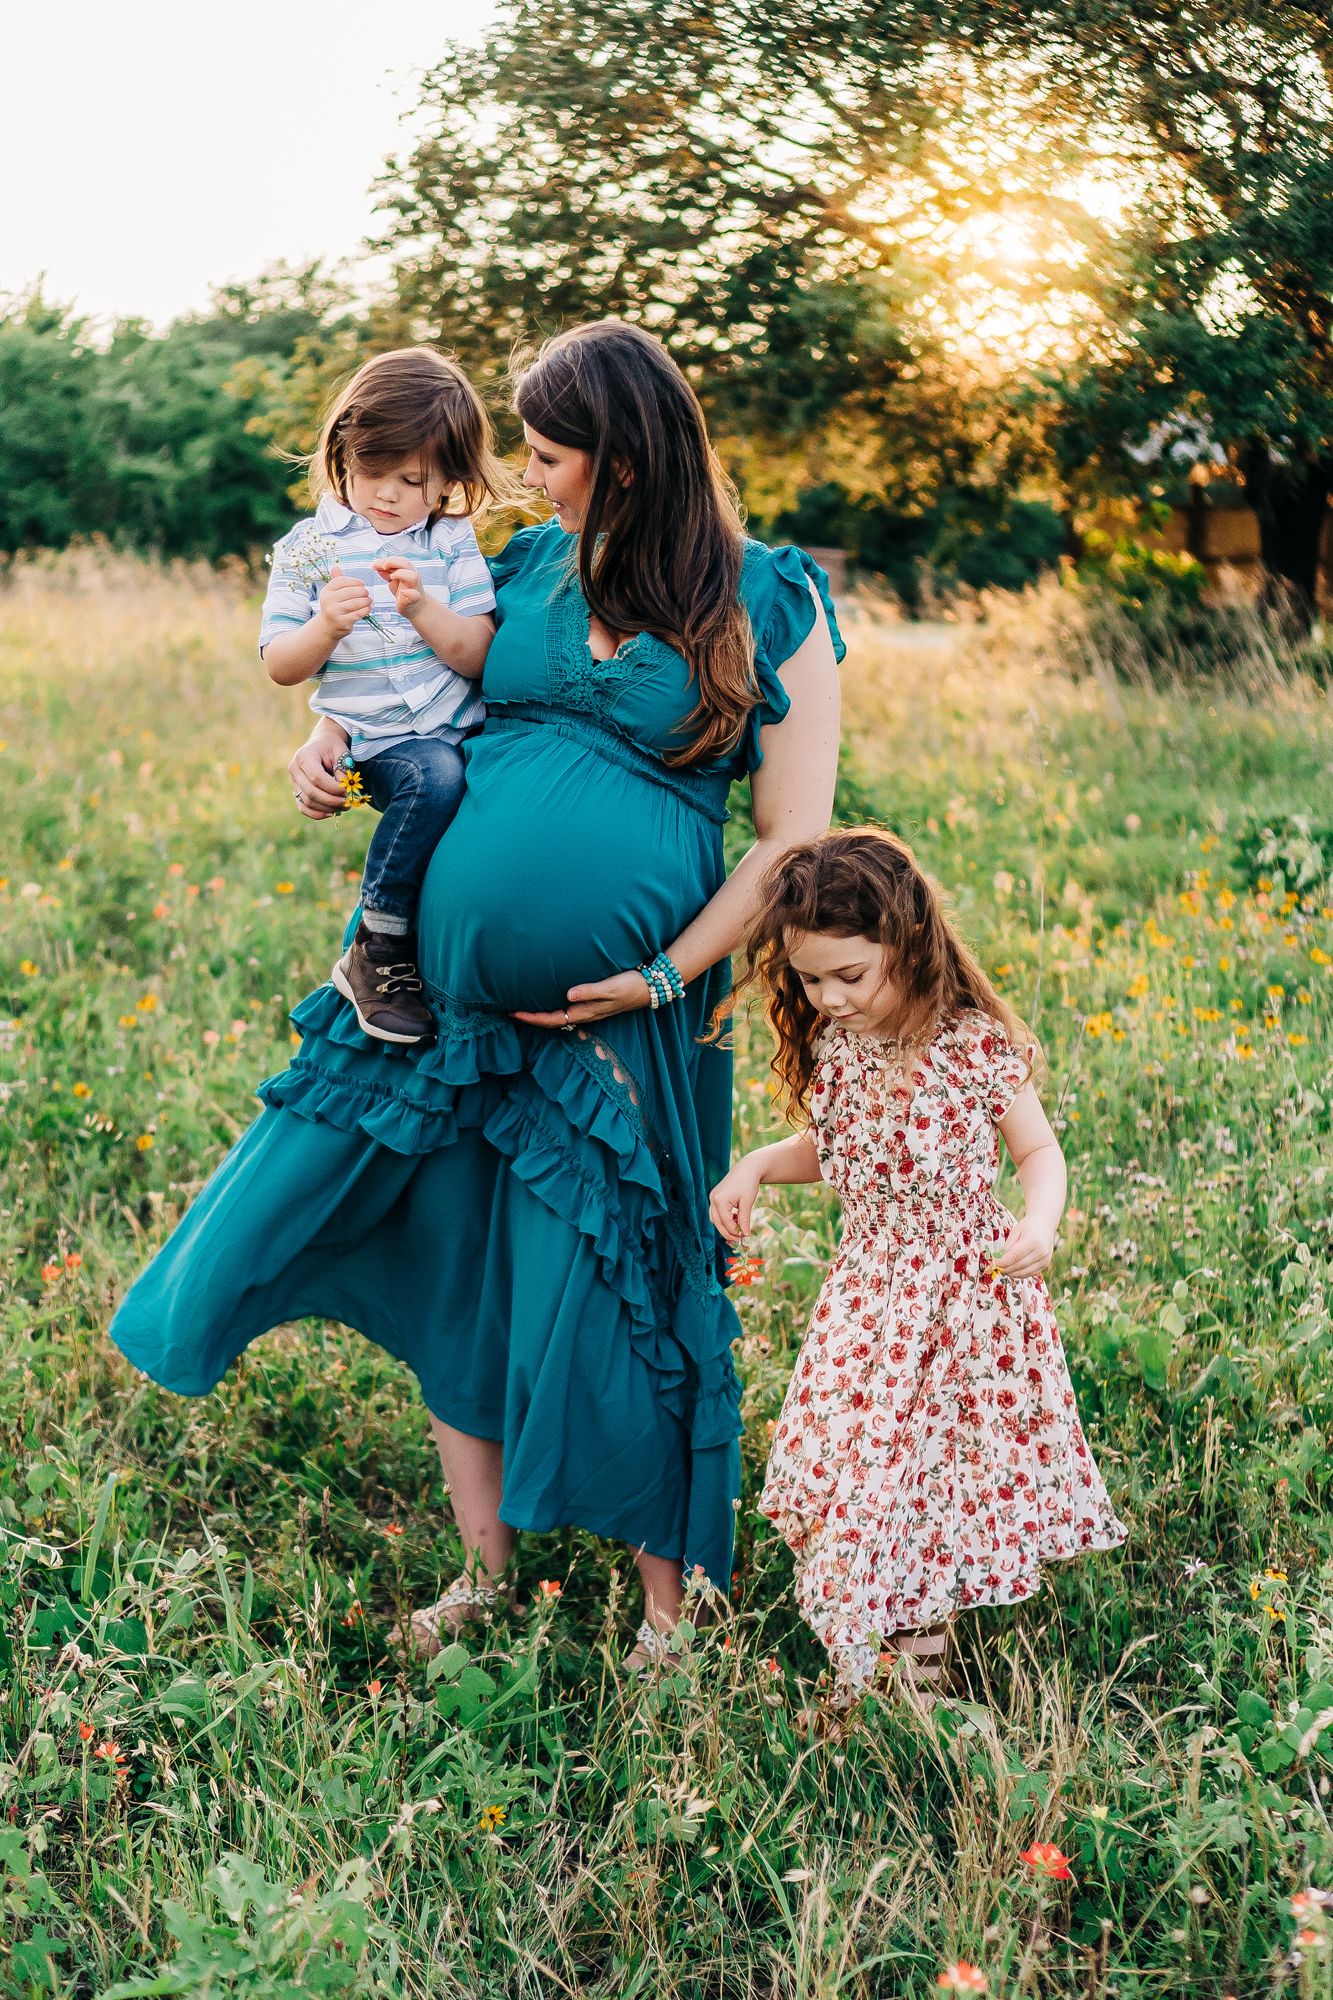 How to prepare for golden hour maternity session | Family Maternity Session | Dallas, Texas Photographer | via brittnierenee.com